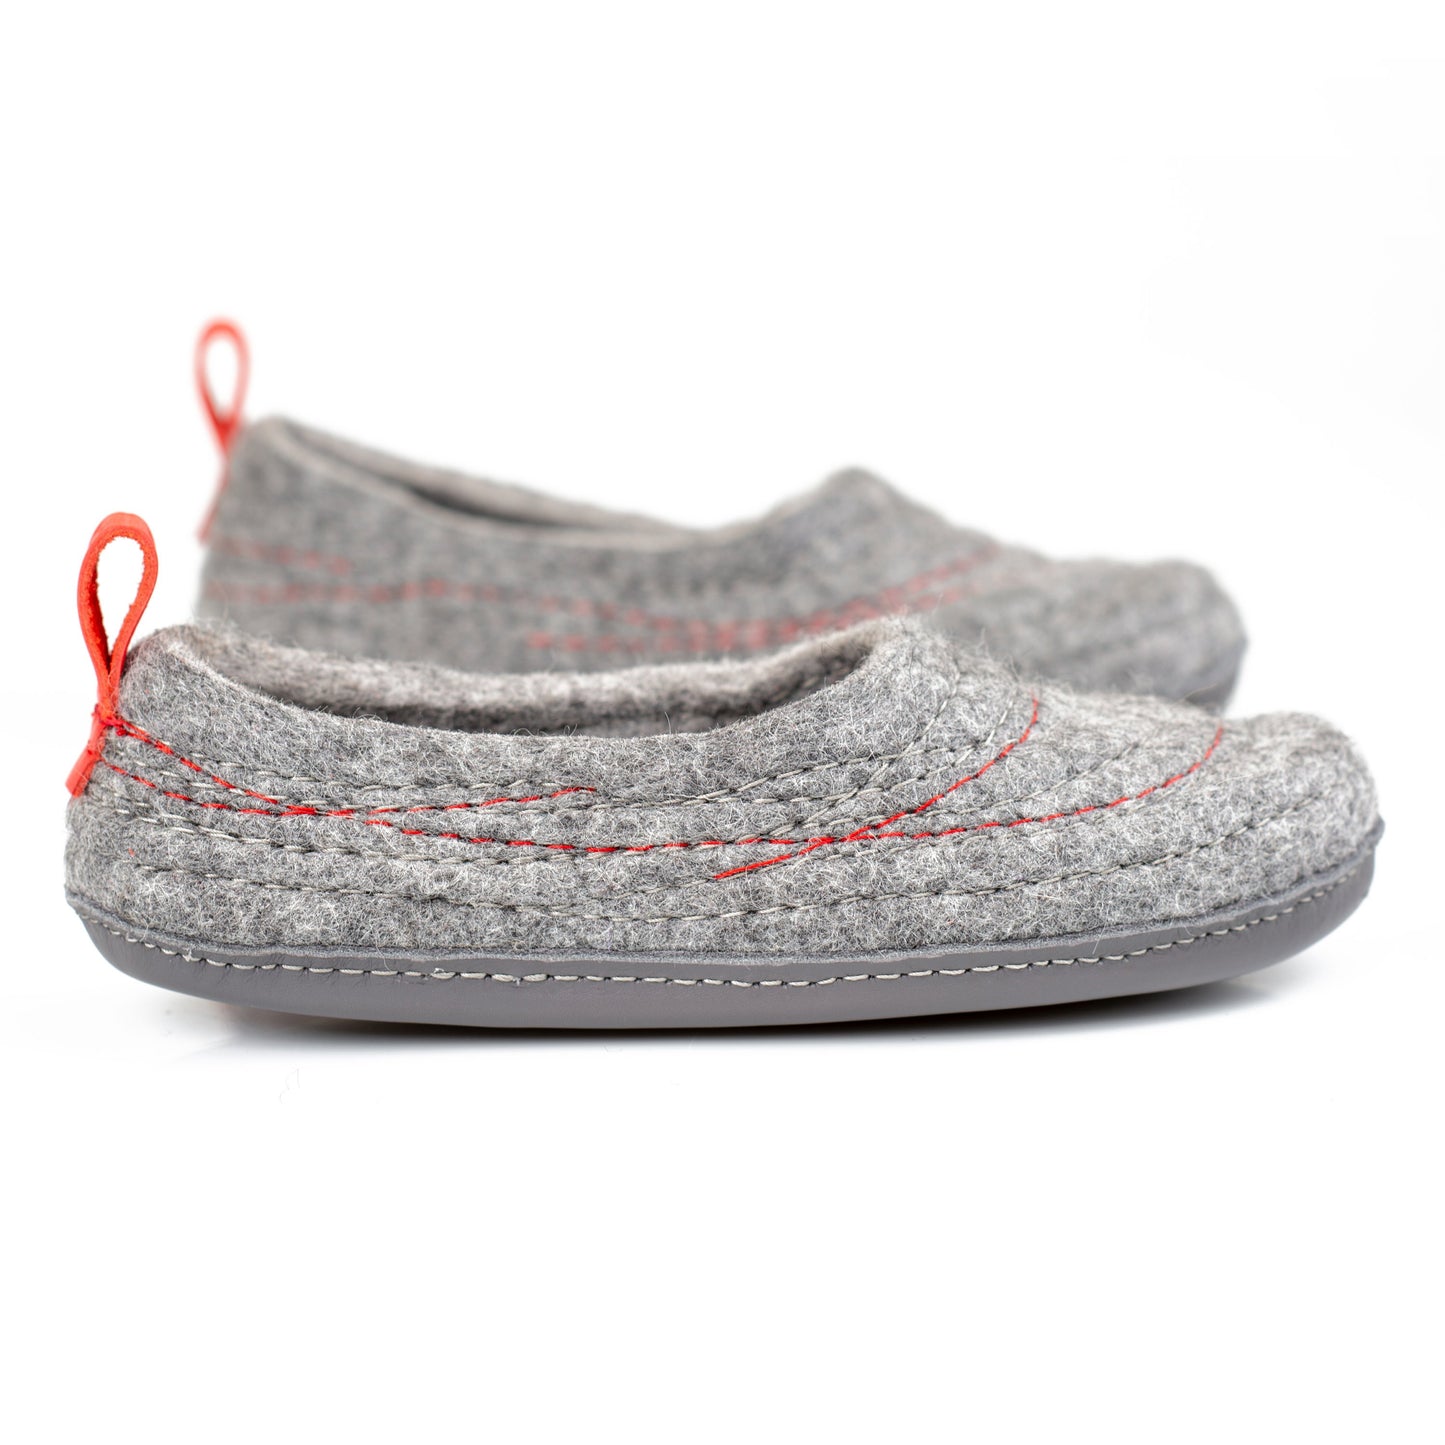 Pure Grey COCOON woolen ladies slippers with minimalist pull loop